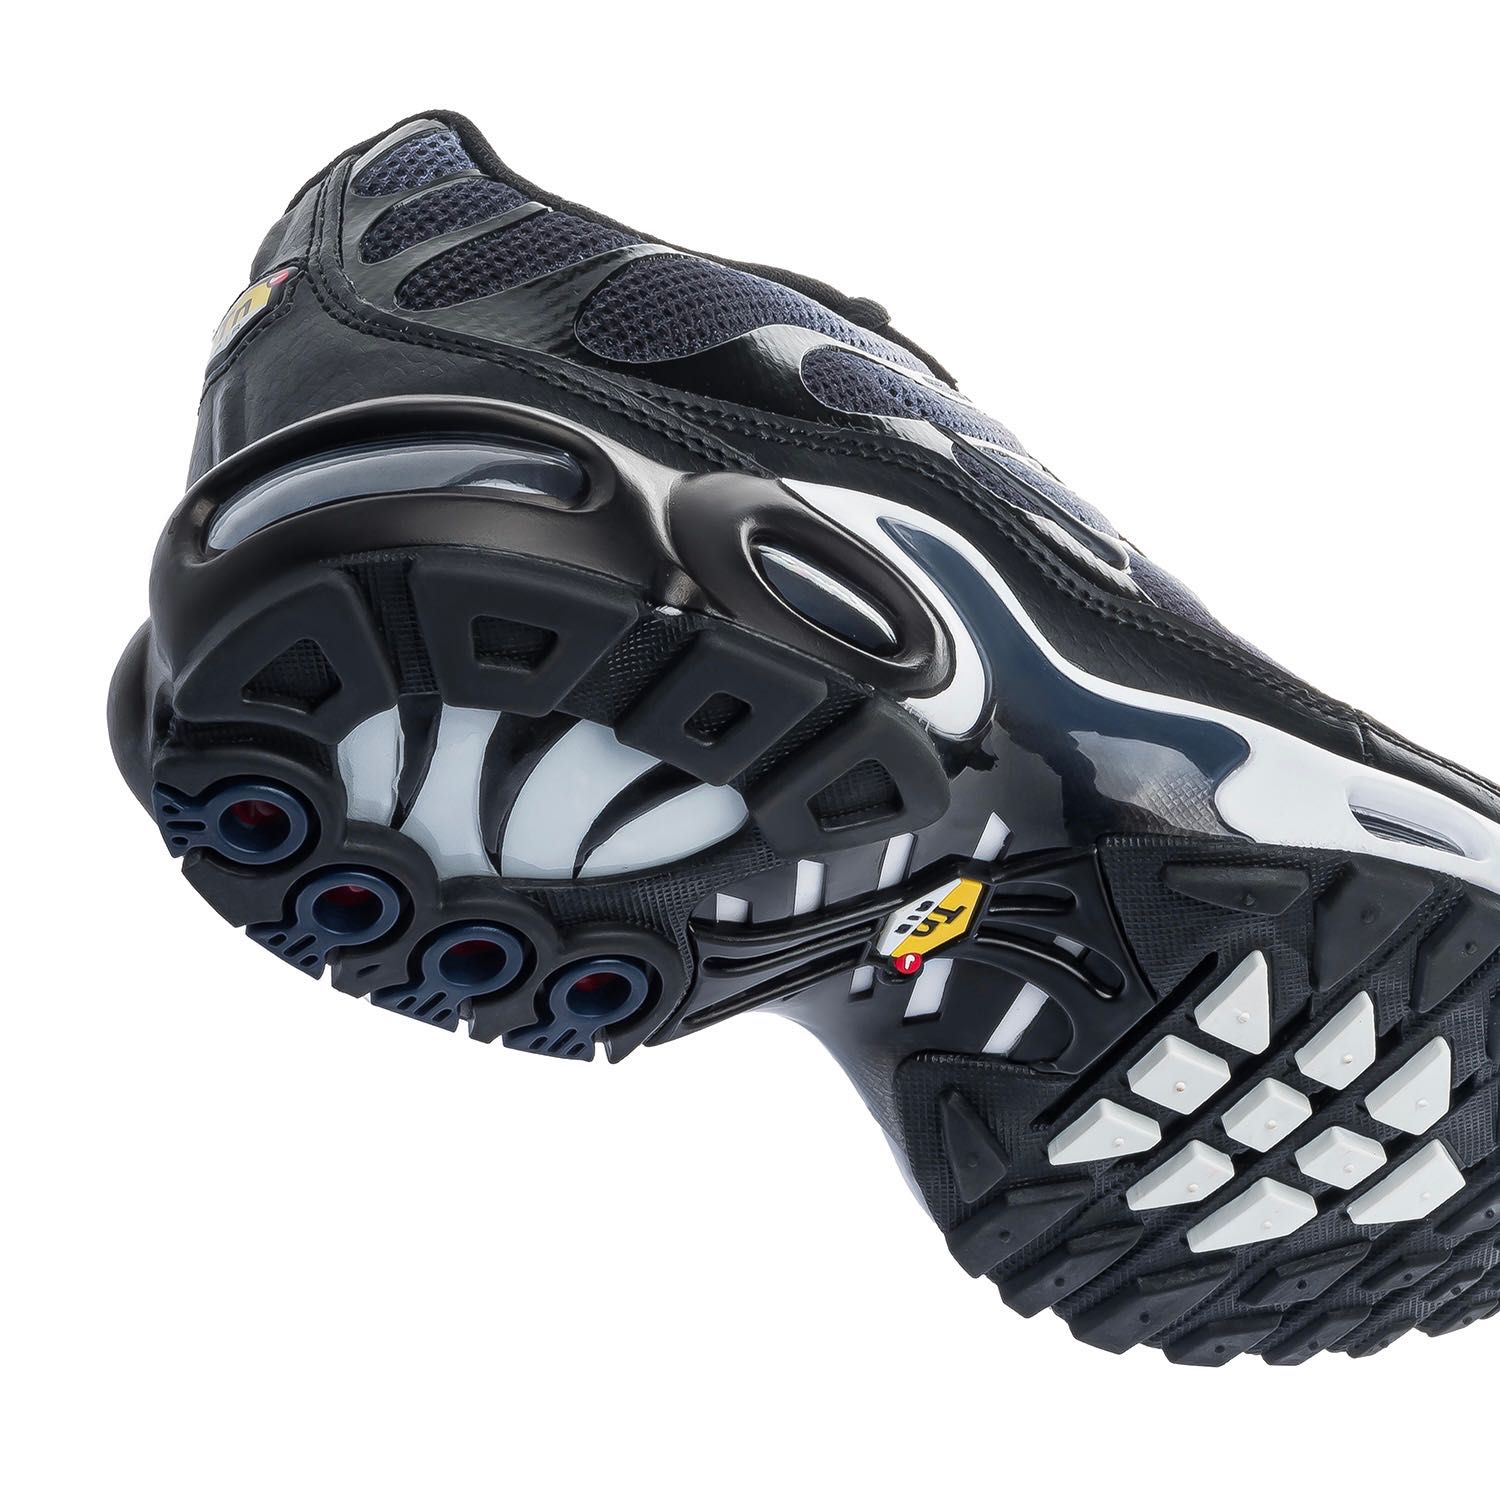 Мужские кроссовки Nike Air Max Plus Black Grey. Размеры 41-45